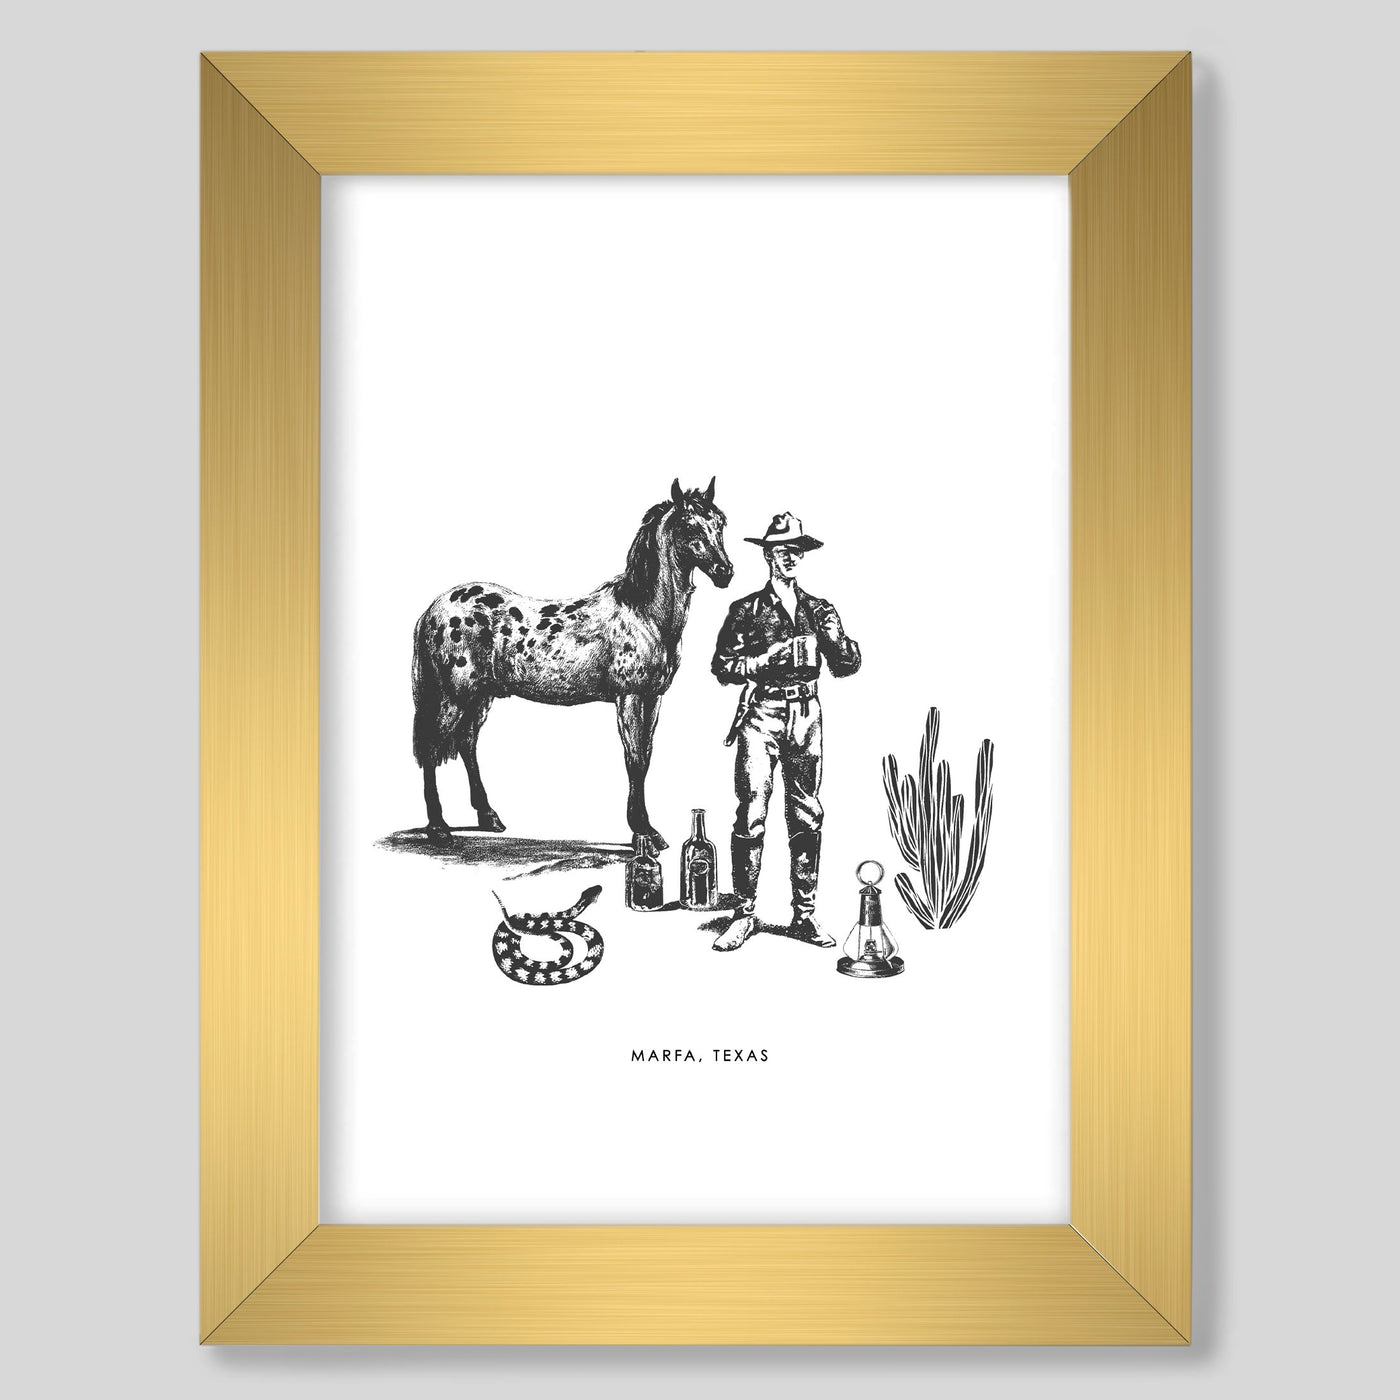 Gallery Prints Black / 8x10 / Gold Frame Marfa Cowboy Print dombezalergii